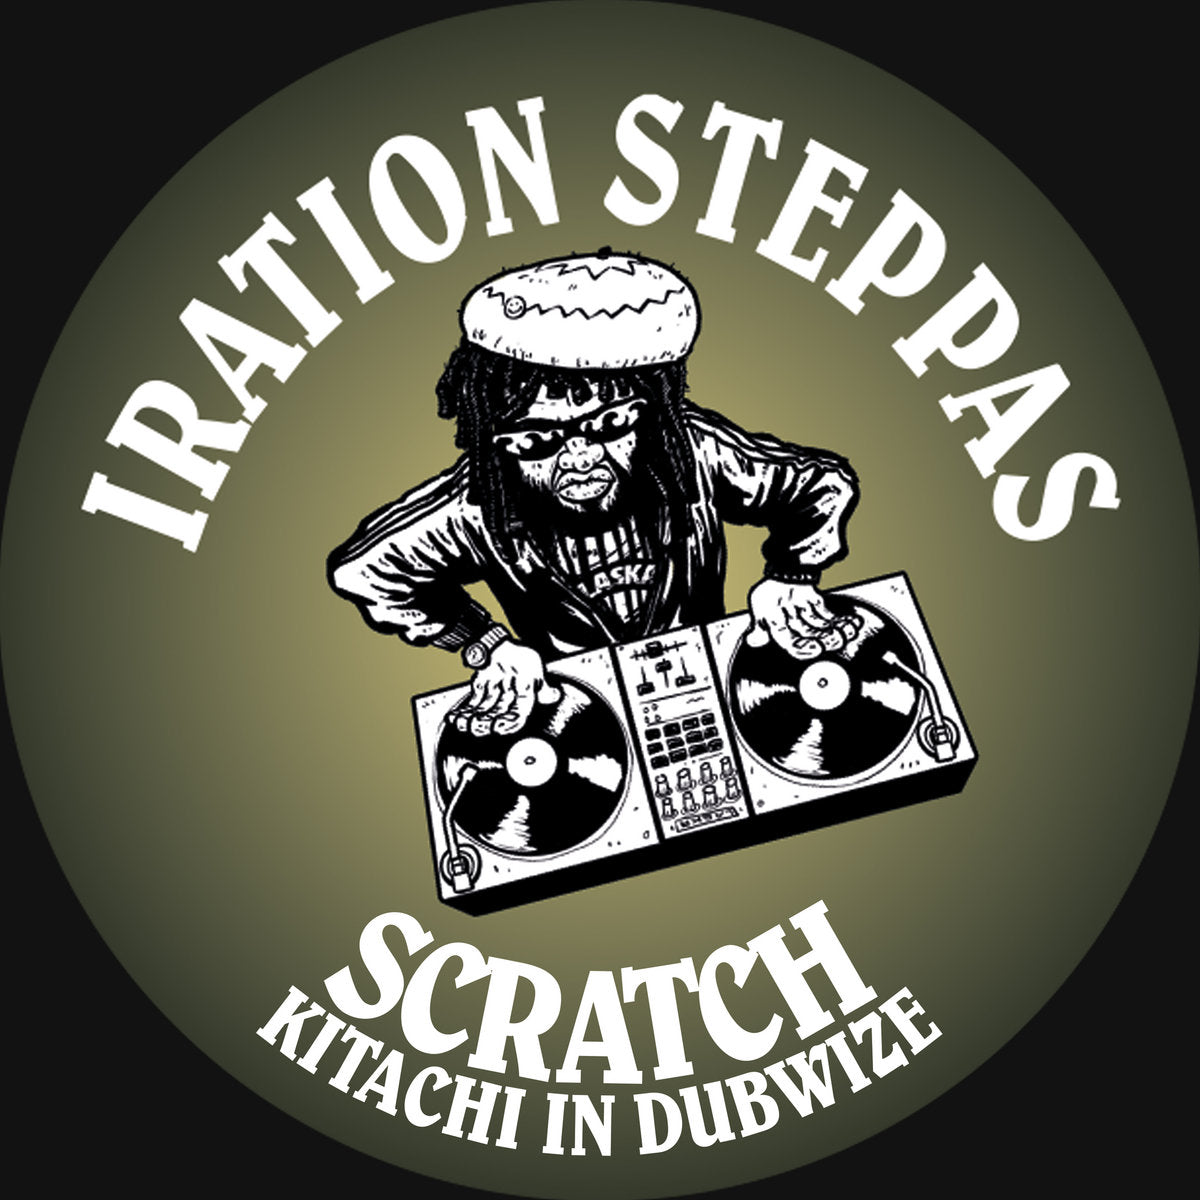 Iration Steppas - Kitachi in Dubwize